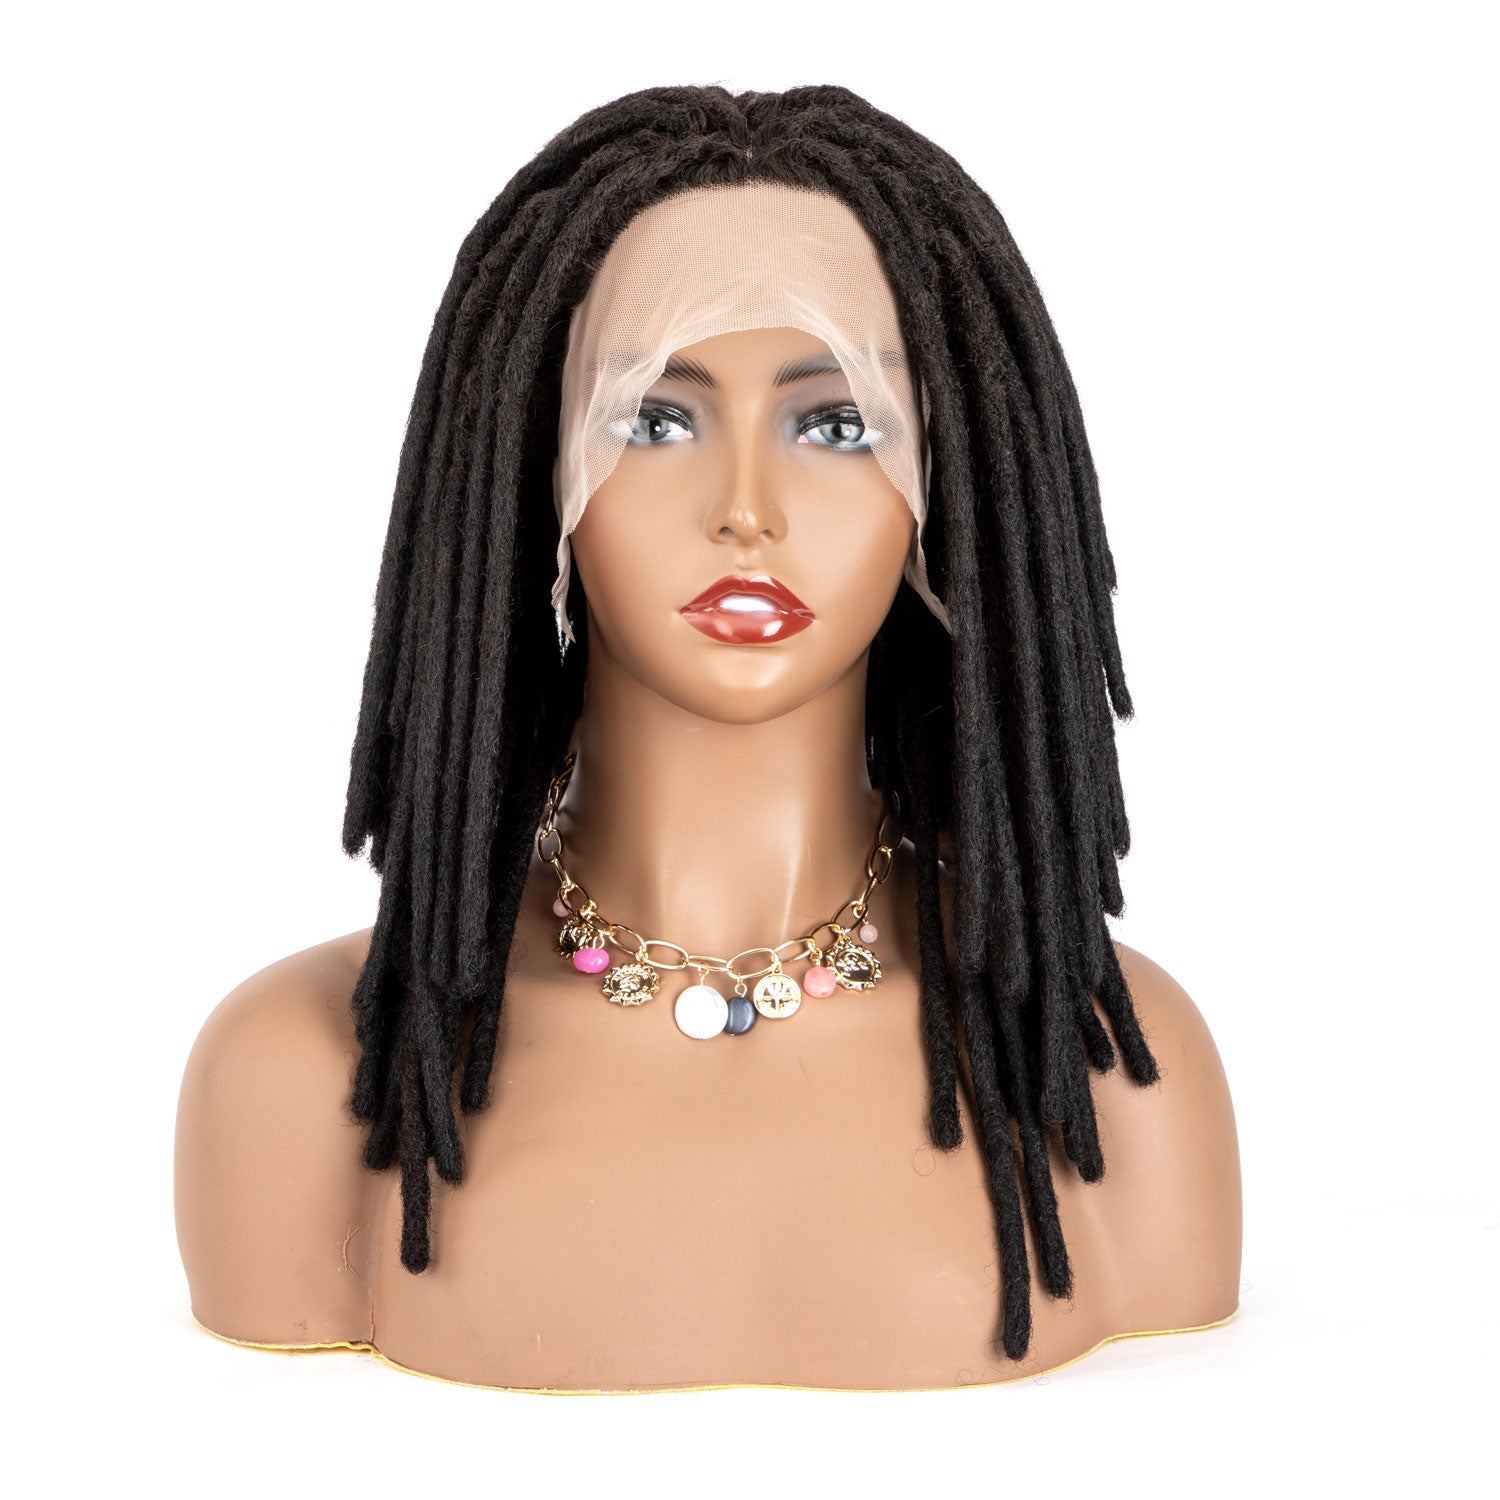 0.8cm 100% Human Hair Dreadlock Wigs Natural Black dreadLocks 12 Inch Human Hair Dreads Wig with Lace Front Dreadlock Wig for Black Women